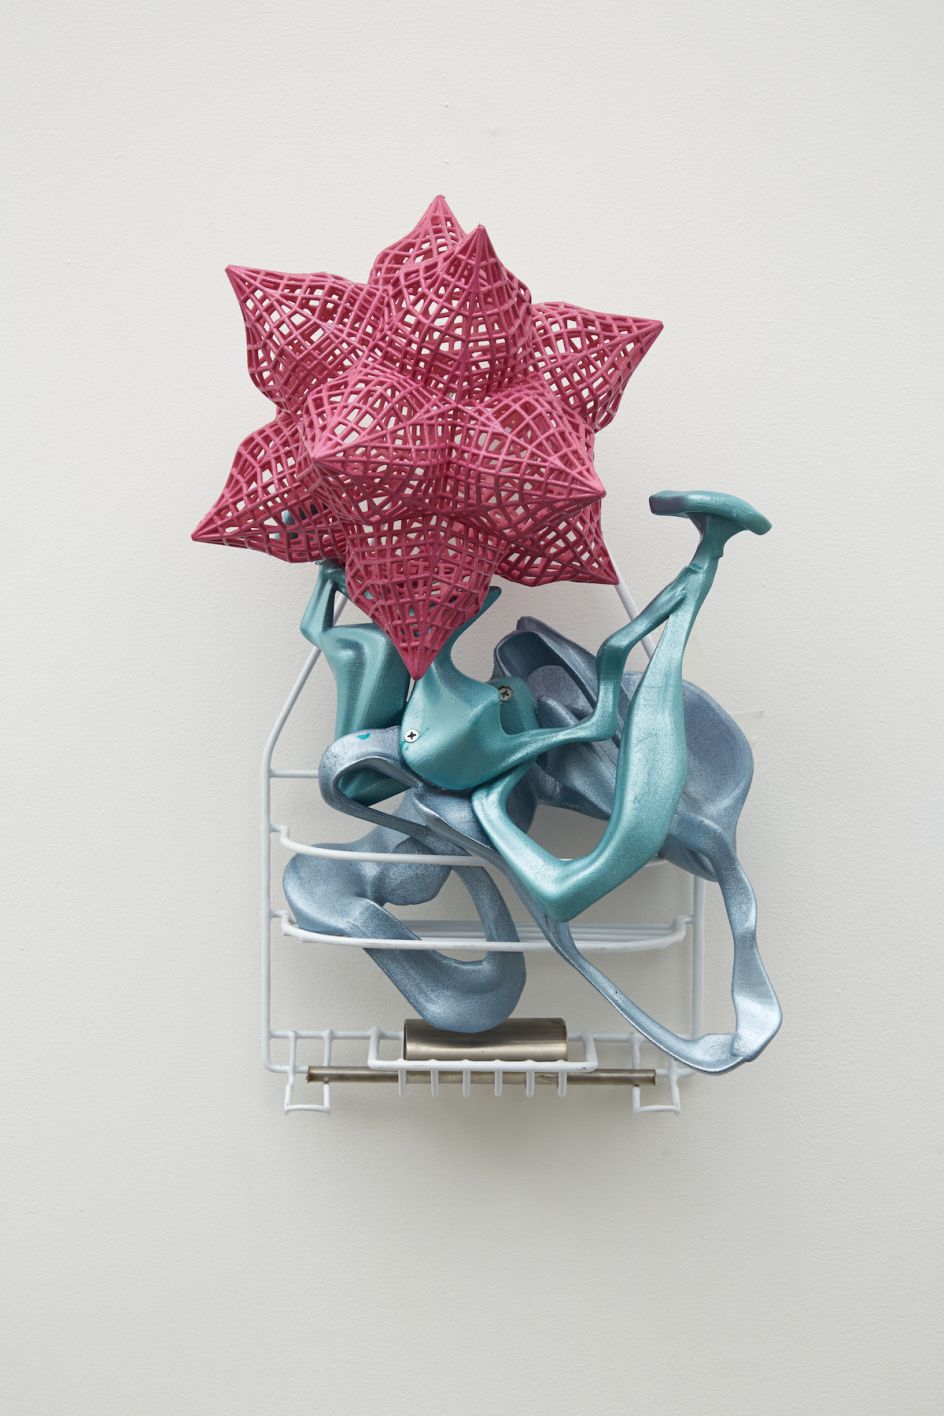 Frank Stella, Scarlatti K series: Puffed Net Star (Smoke 1), 2014, painted RPT with metal, 53 x 31 x 28 cm. Picture credit: artwork © Frank Stella (page 95)